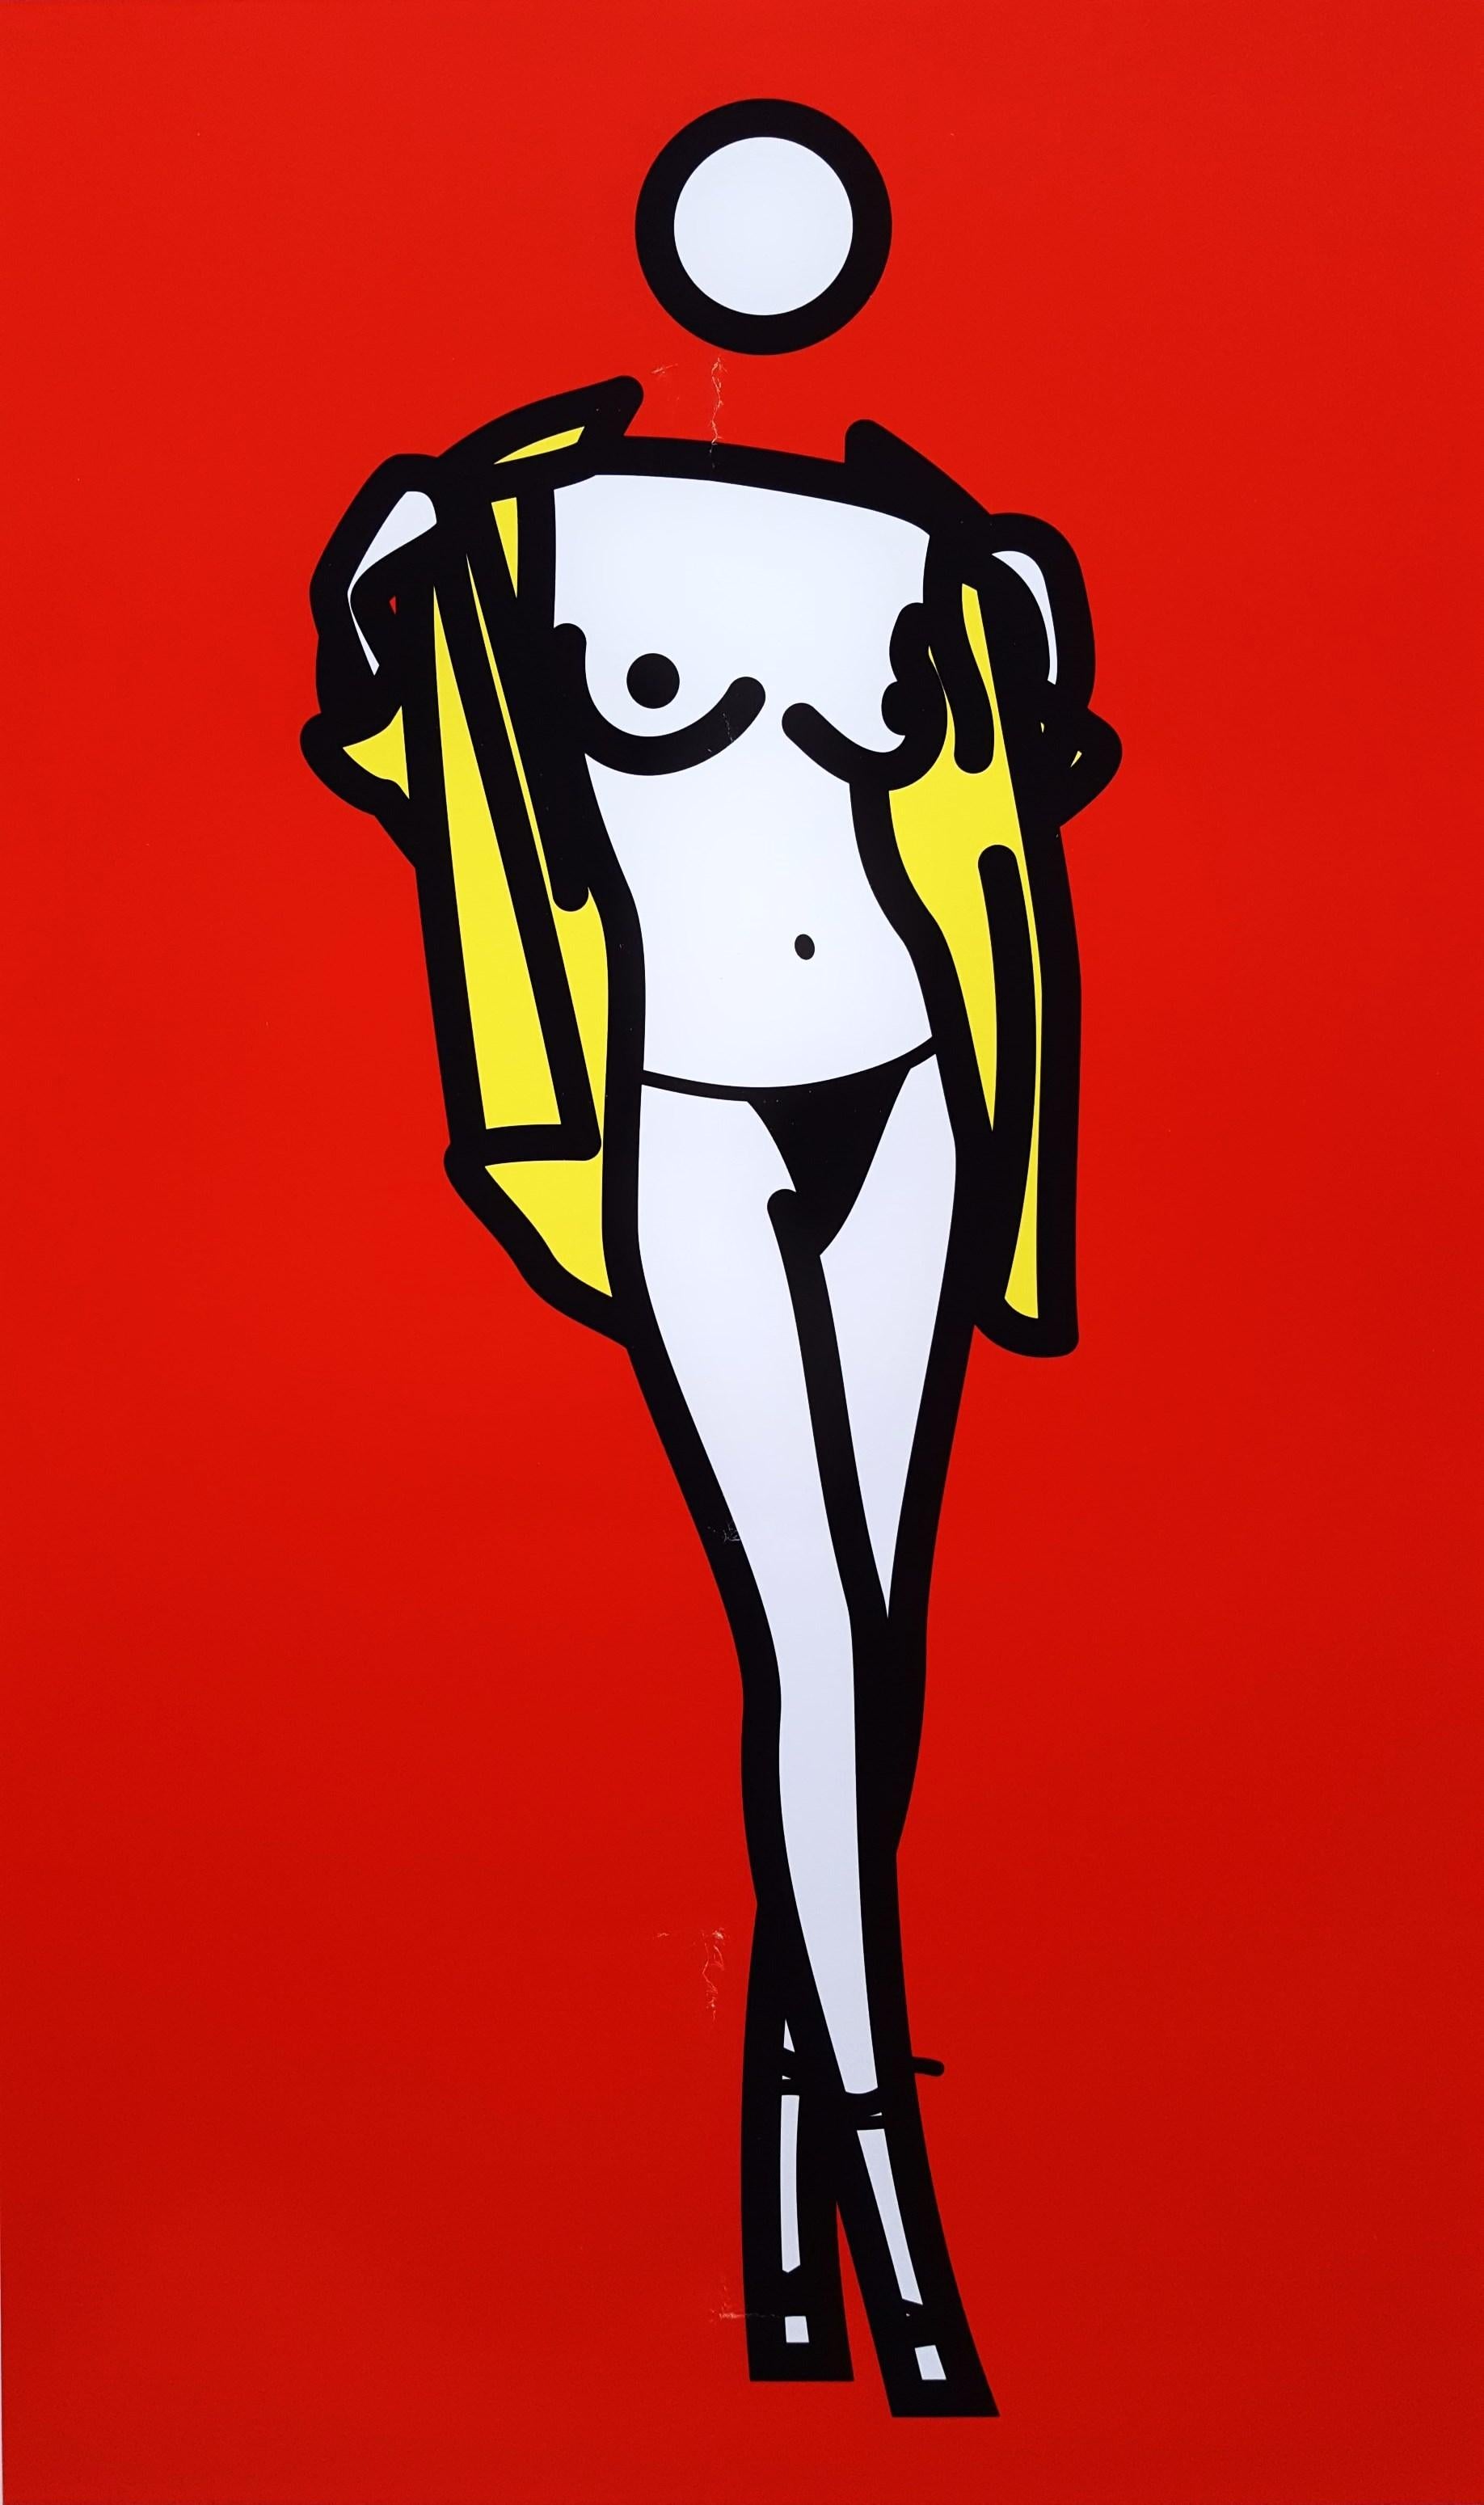 Julian Opie Nude Print - Woman Taking Off Man's Shirt